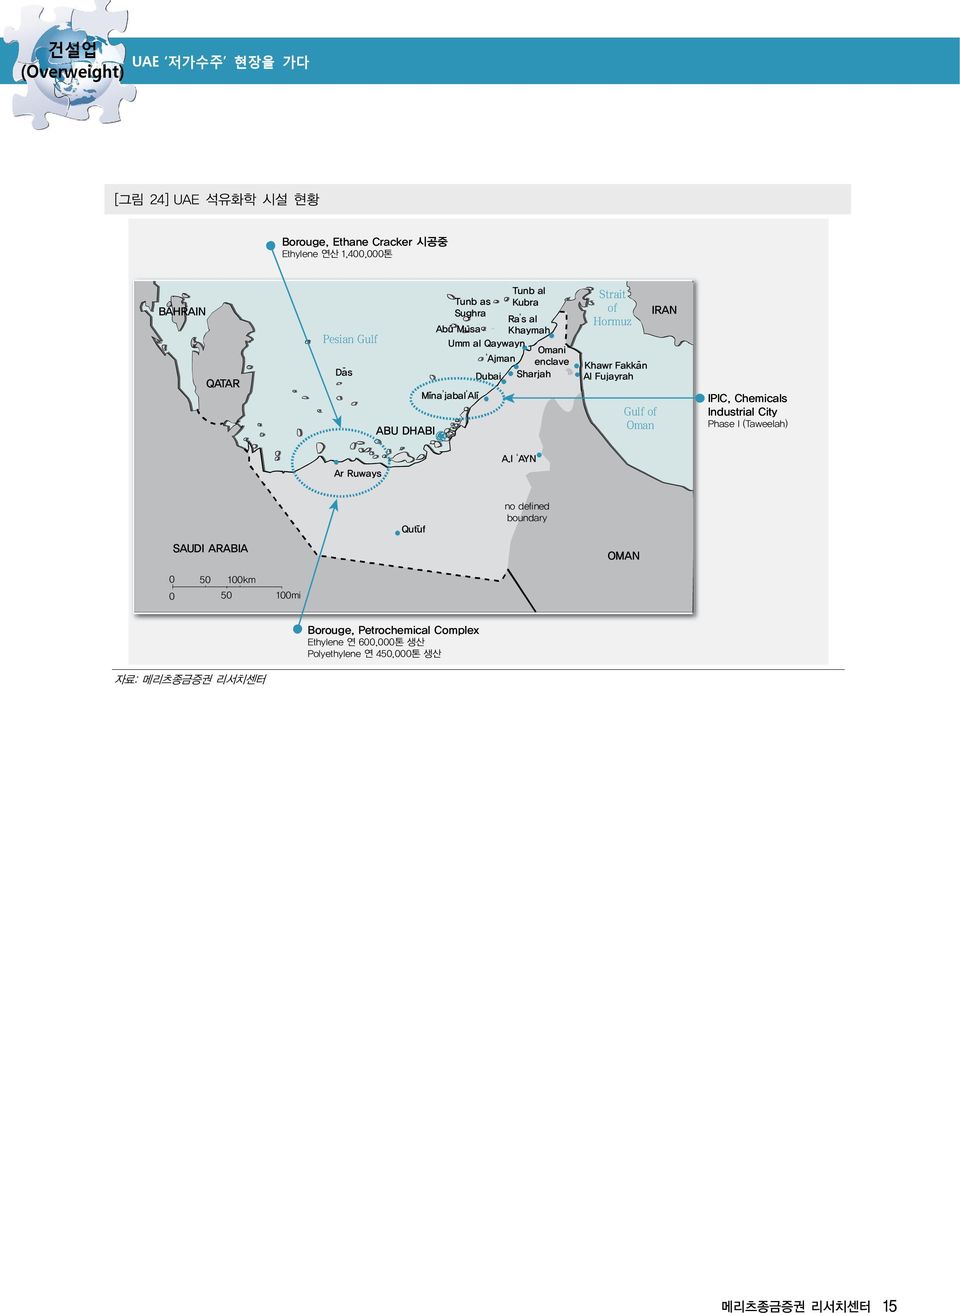 Fakkan Al Fujayrah Gulf of Oman IRAN IPIC, Chemicals Industrial City Phase I (Taweelah) Ar Ruways A.